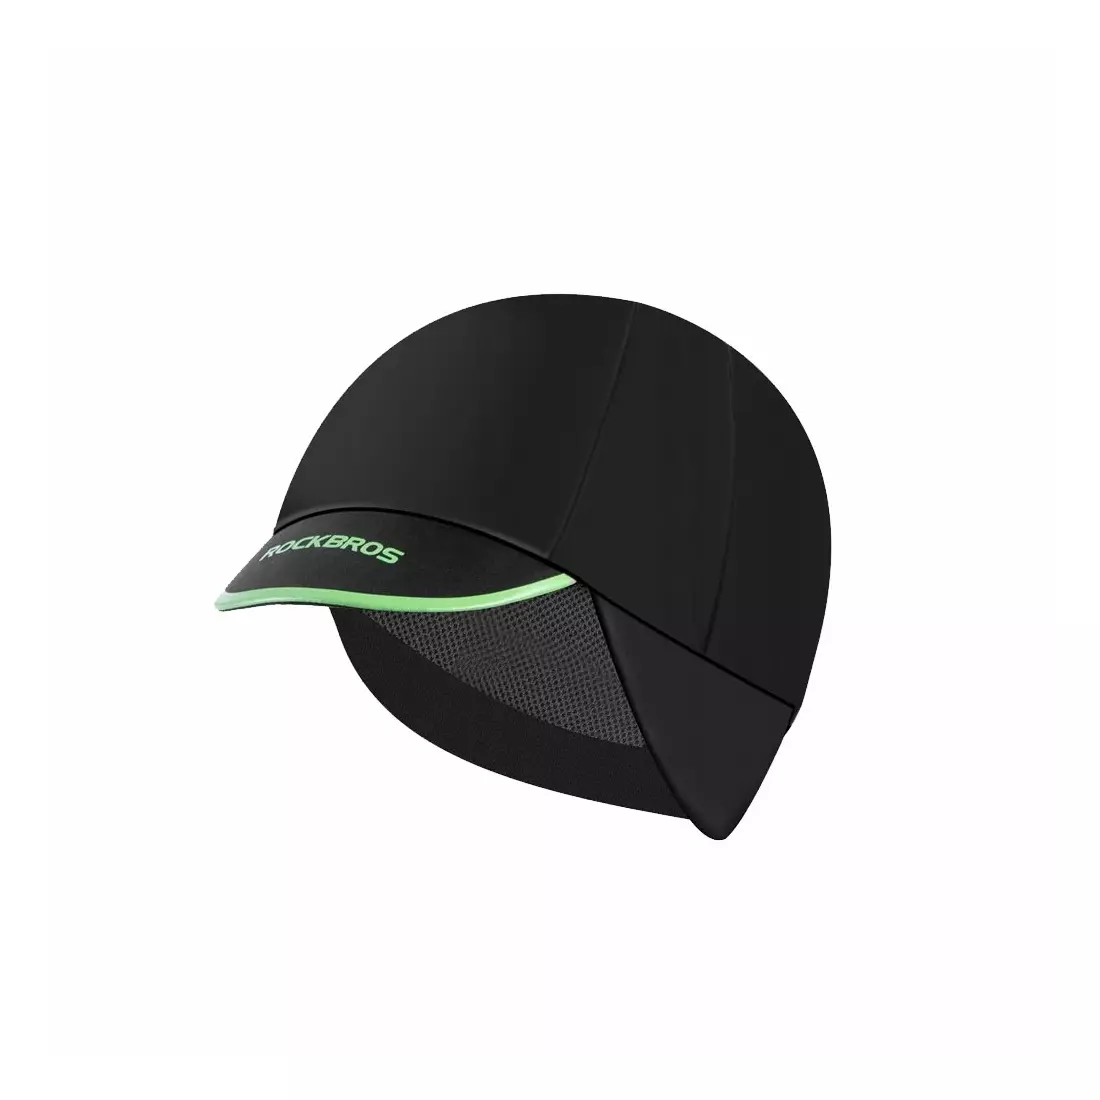 Rockbros helmet visor cycling cap, insulated, black YPP001